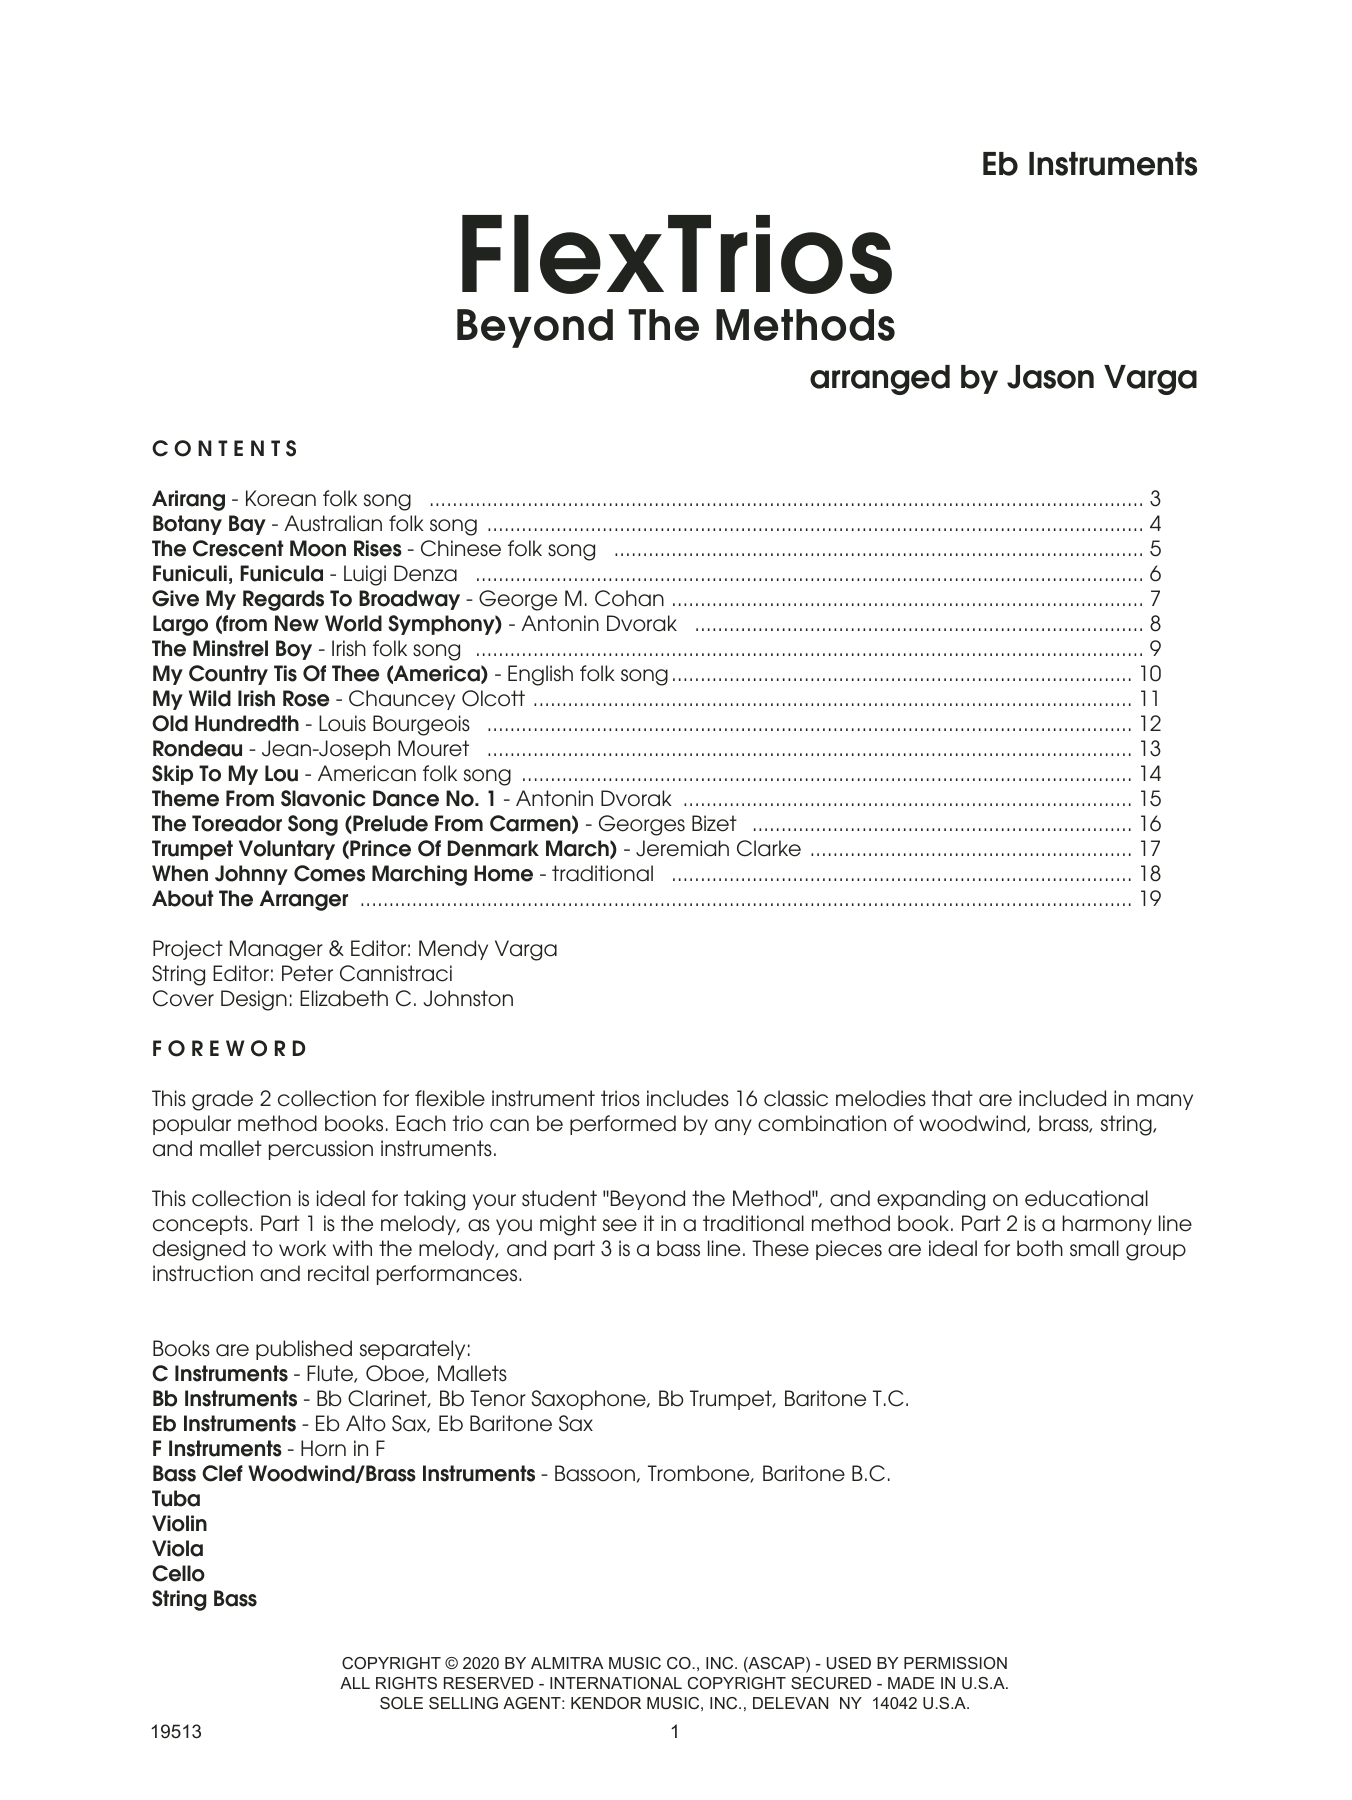 Flextrios - Beyond The Methods (16 Pieces) - Eb Instruments (Woodwind Ensemble) von Jason Varga